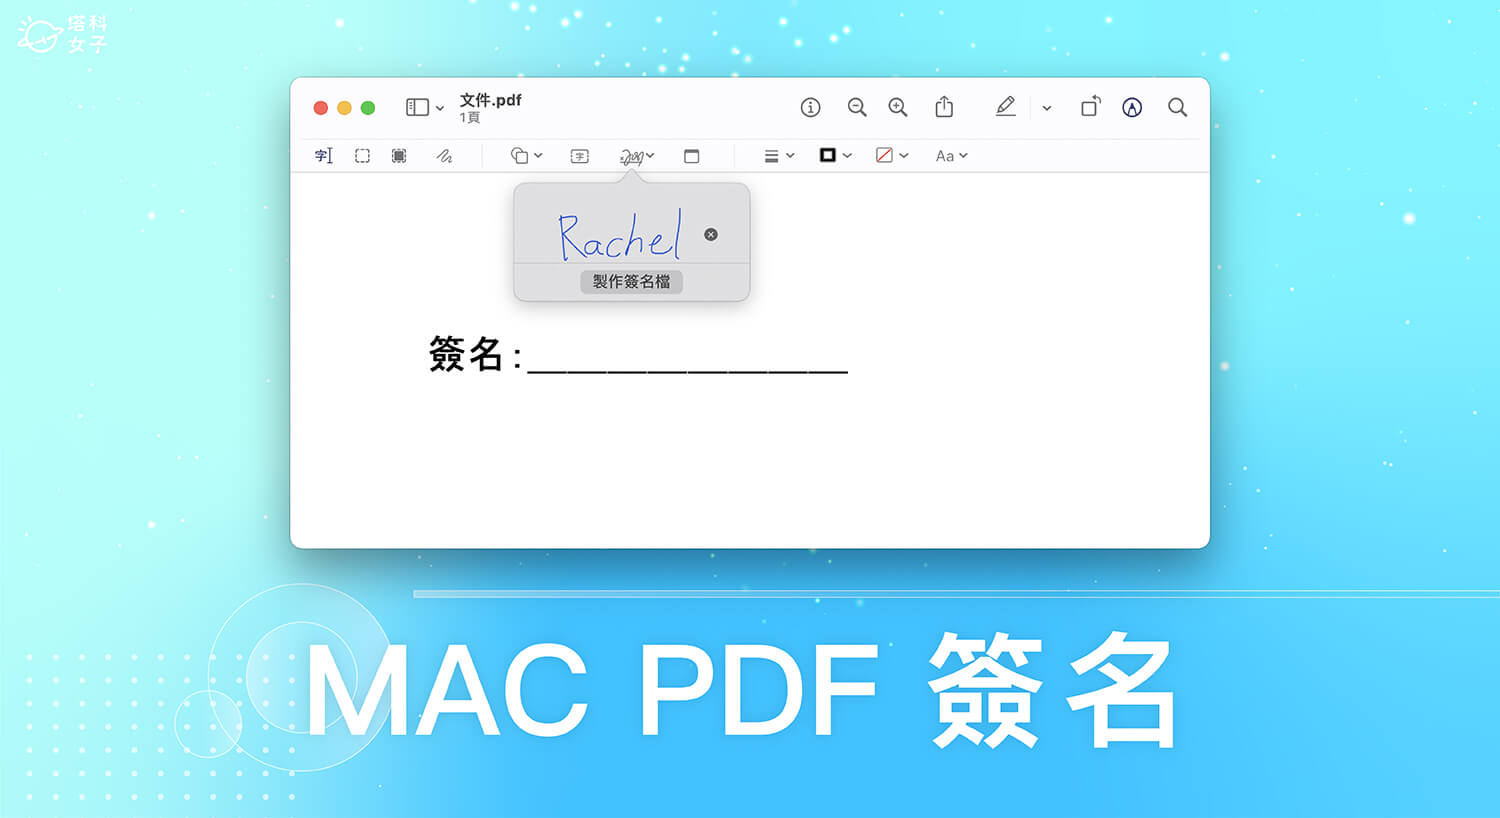 Mac PDF 簽名教學，使用 macOC 內建功能簽名 (免安裝)